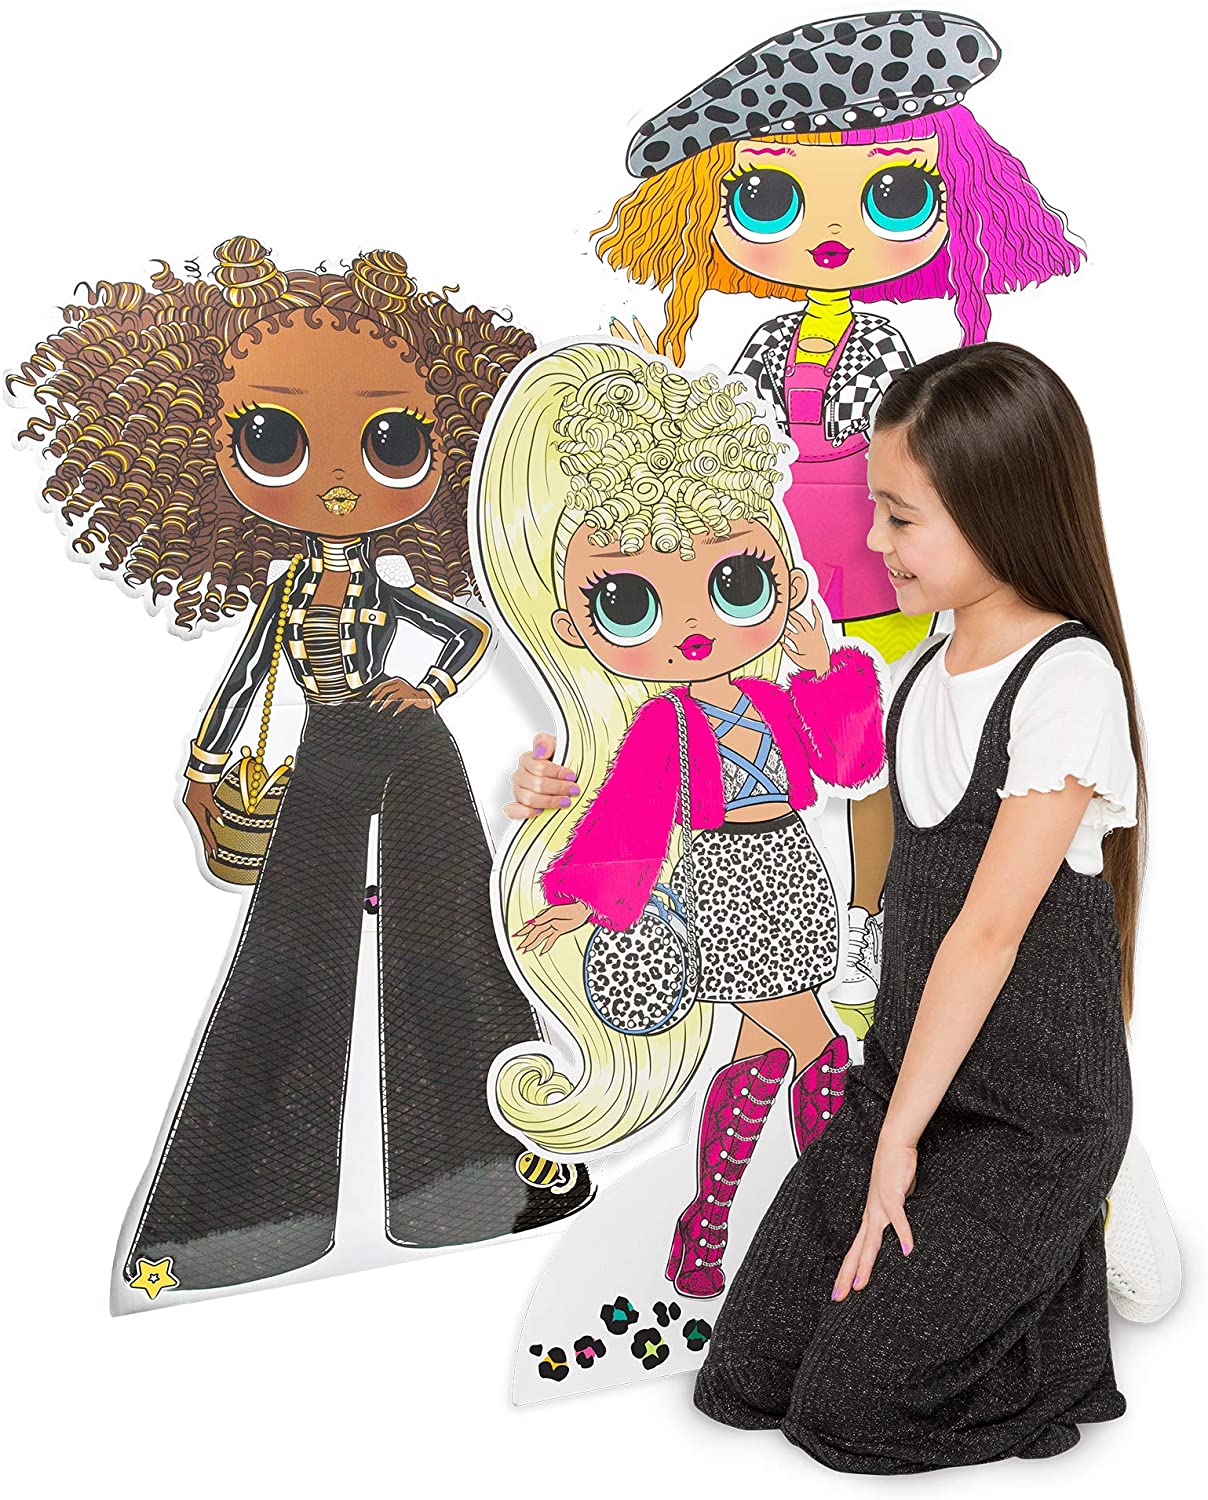 LOL OMG Surprise Dress Up Designer with 3 LOL OMG dolls 30 inches dolls